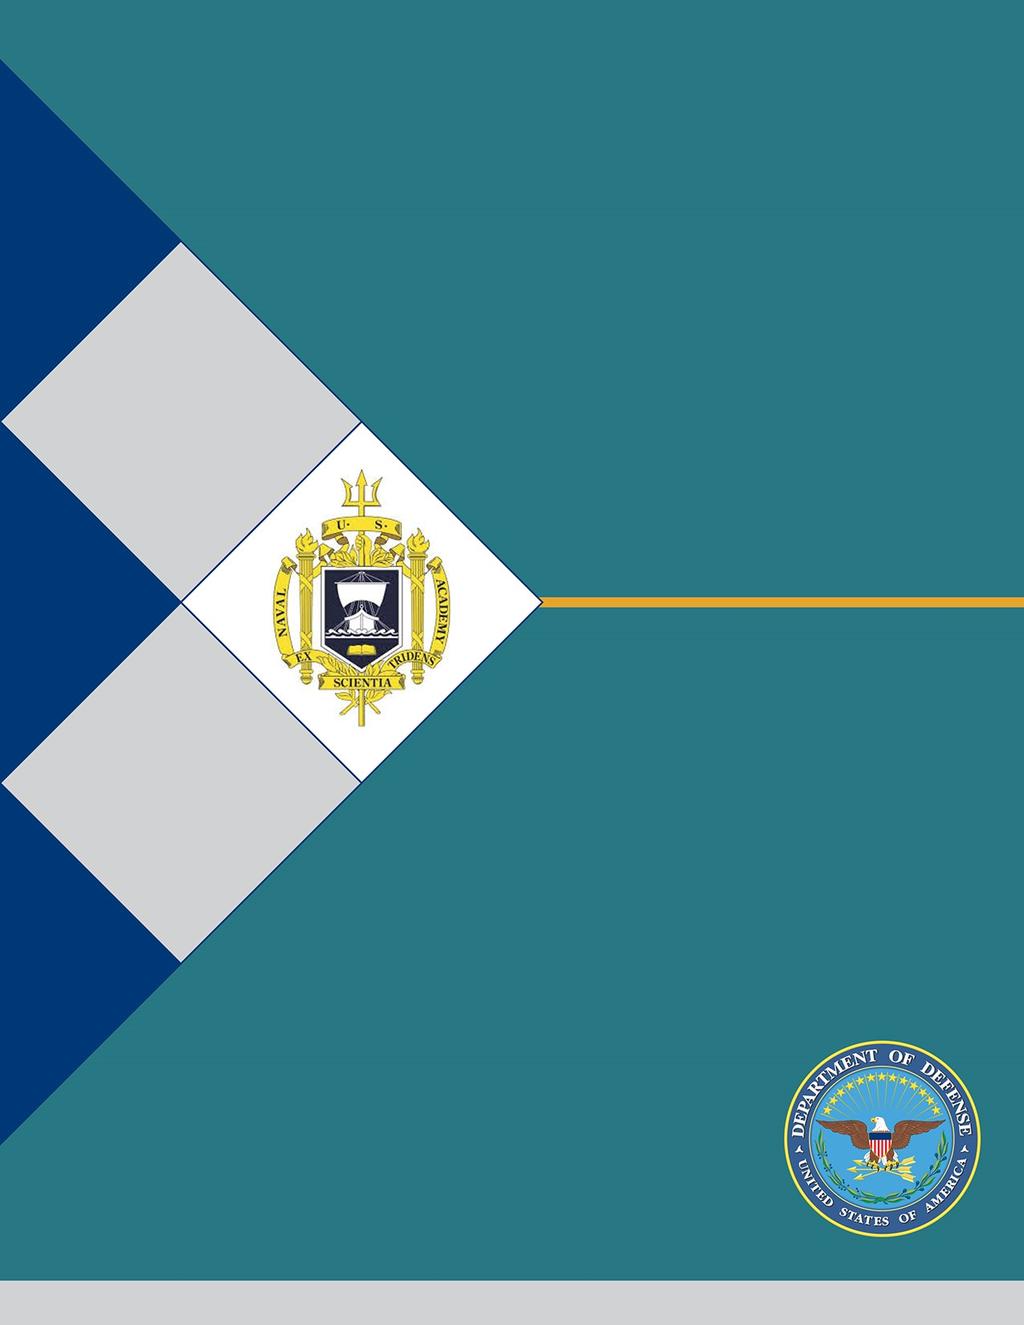 Appendix B: United States Naval Academy